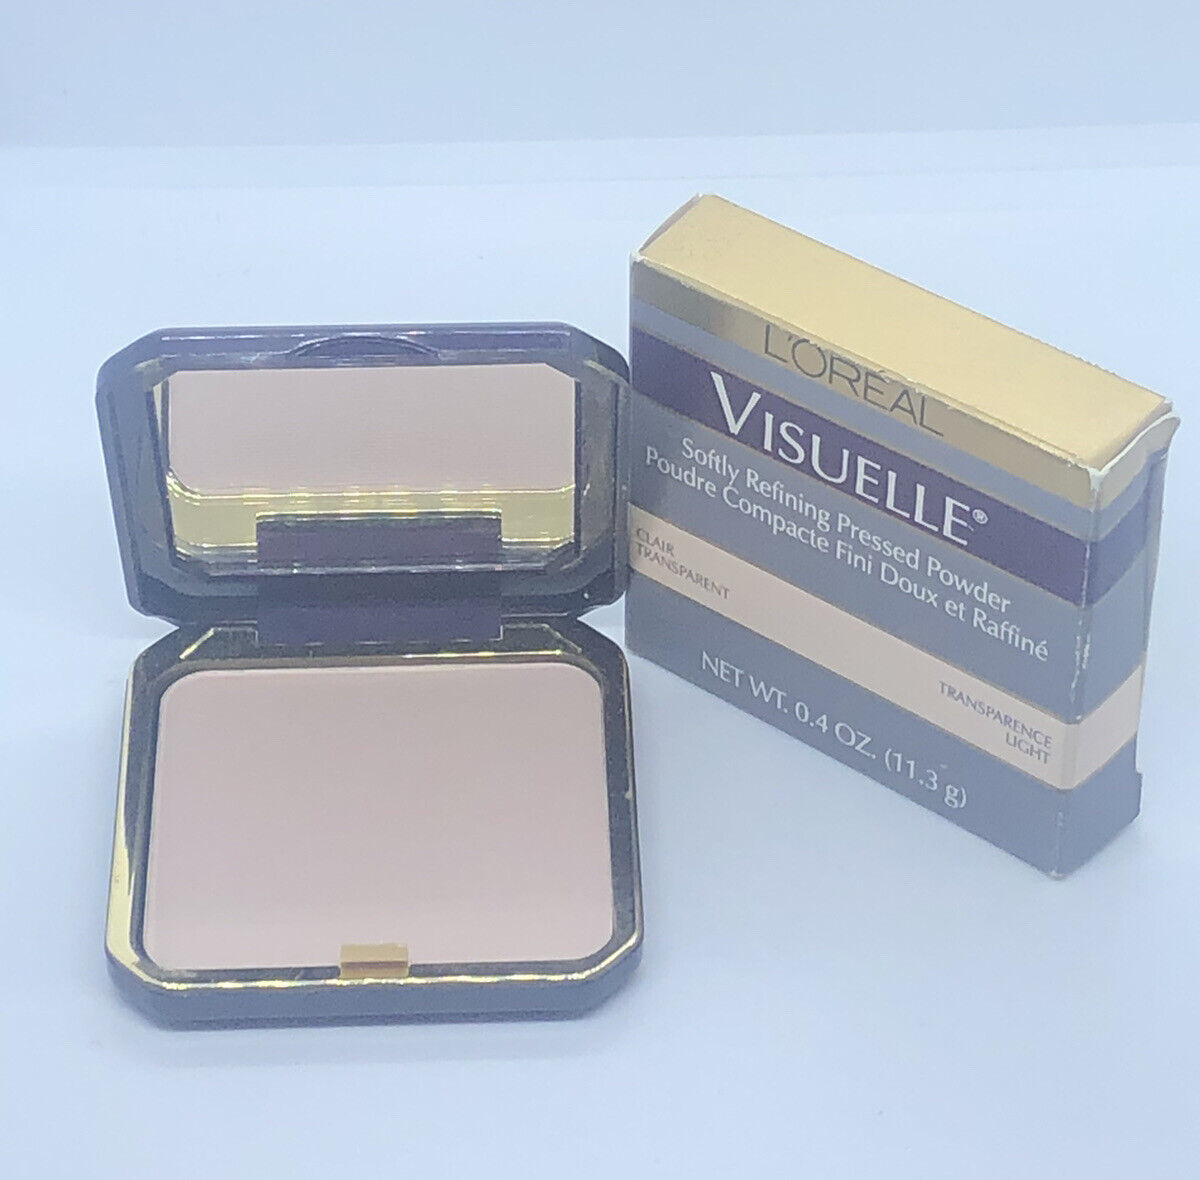 L'Oreal Visuelle Soft Refining Pressed Powder (Light) 11.3 g/.4 oz F/S - $9.80